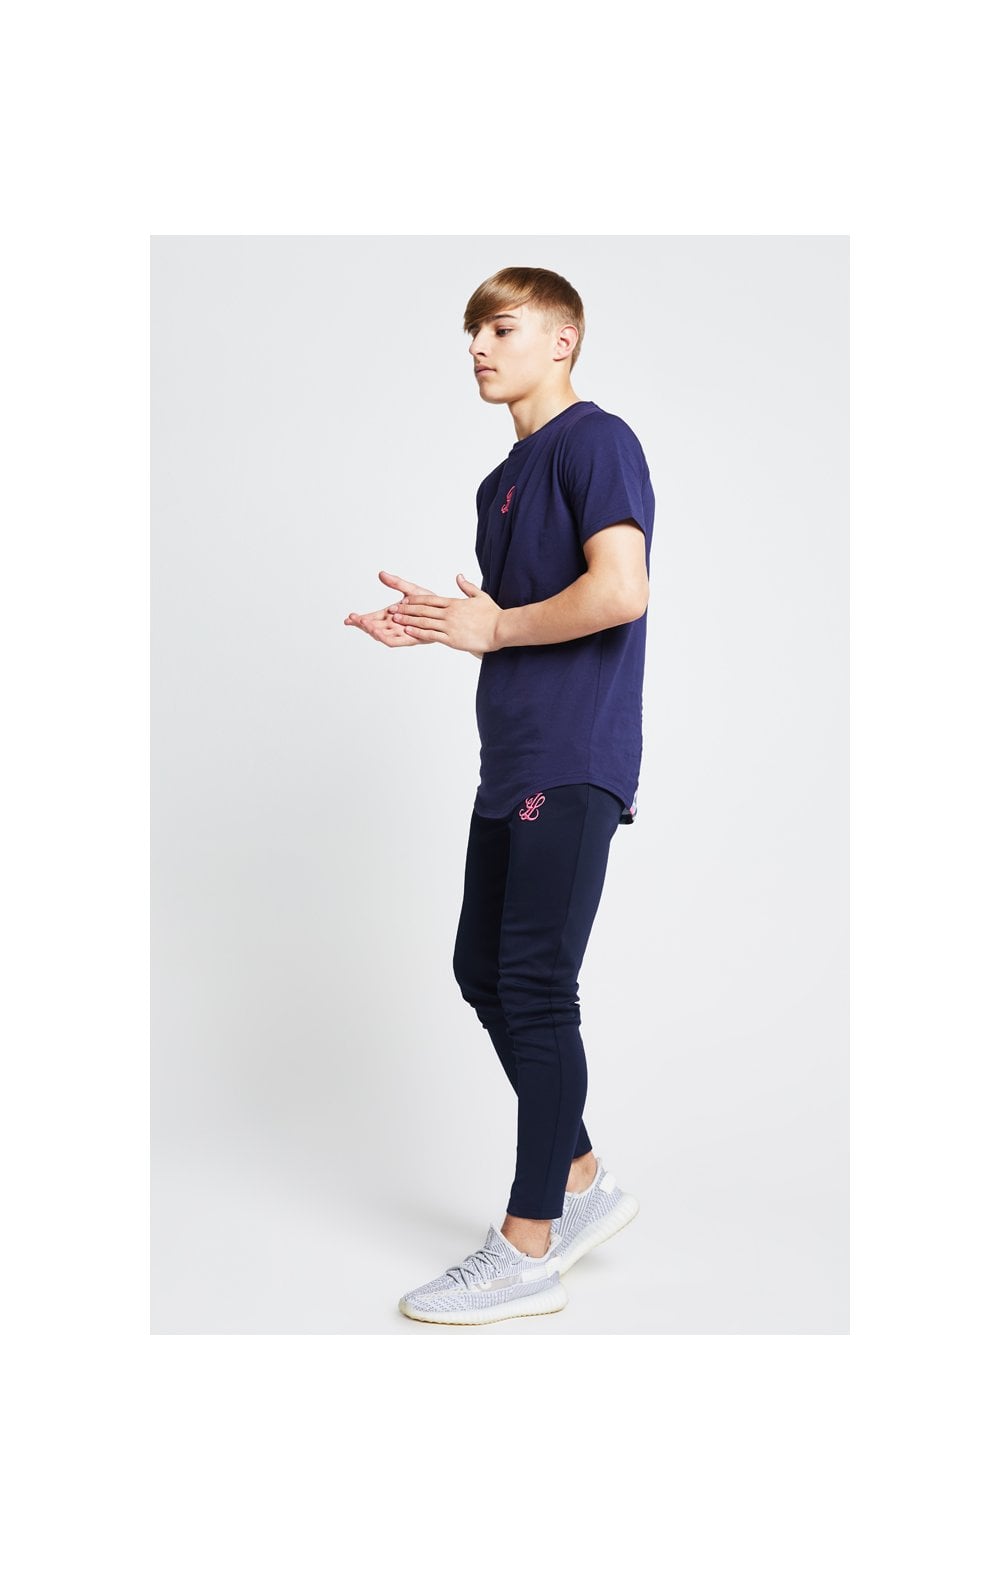 Illusive London T-Shirt Schulterfrei - Marineblau und Neon Rosa Camouflage (4)